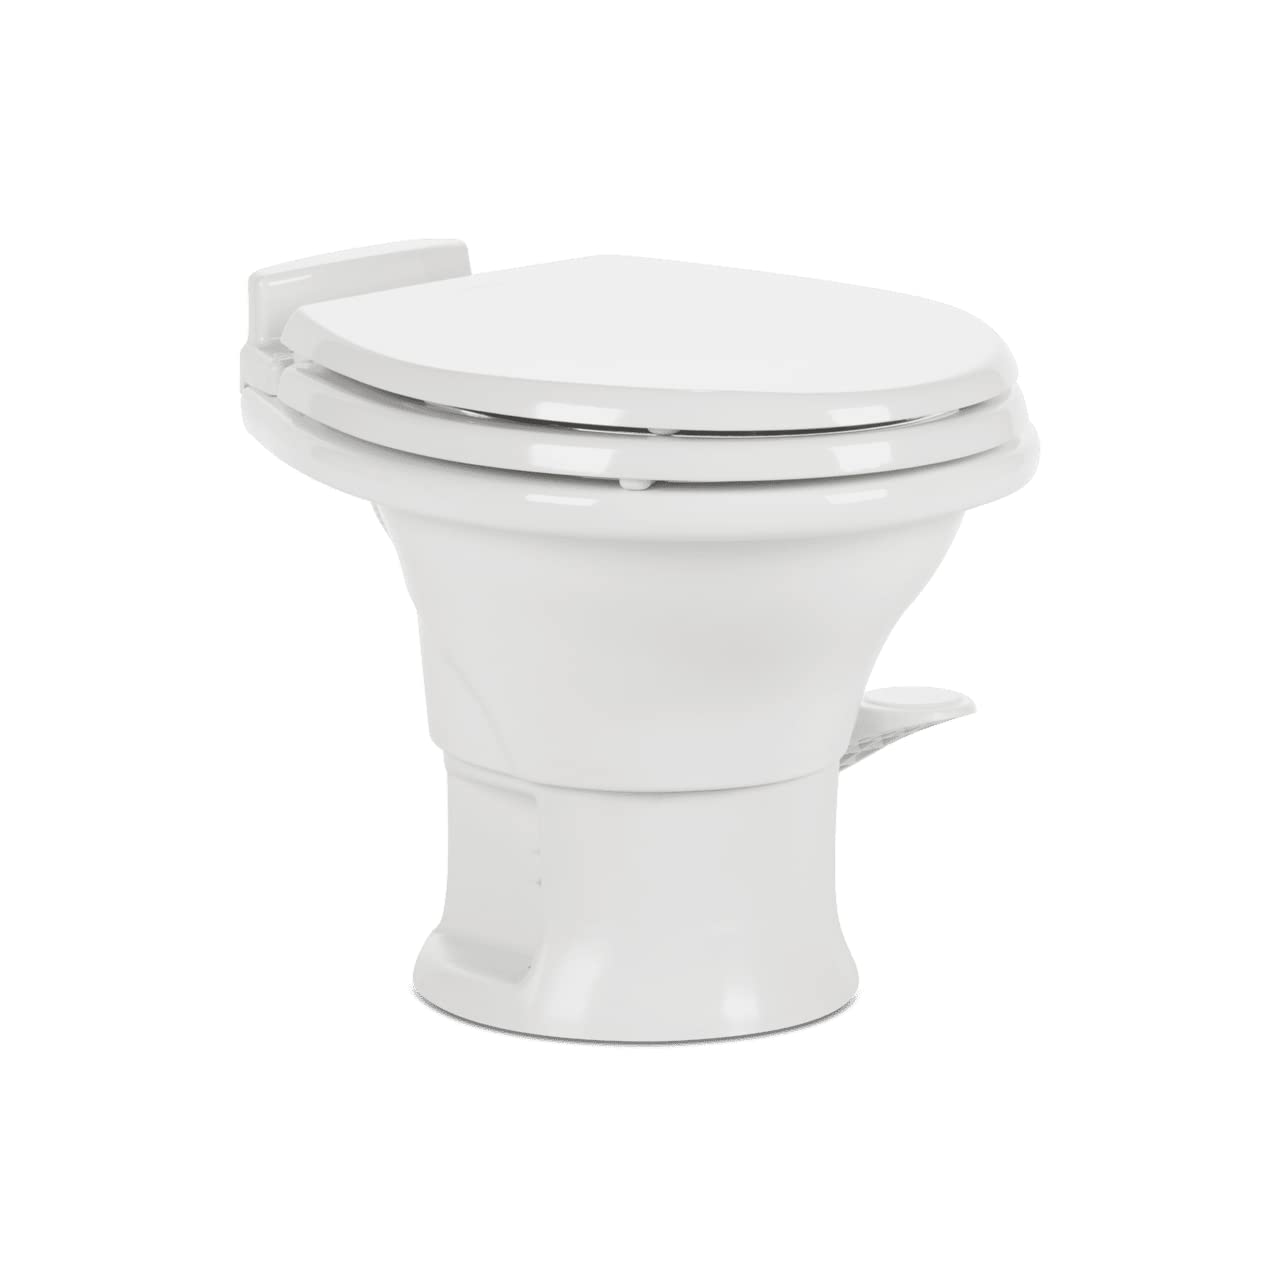 Dometic 311 Ceramic Low Profile RV Toilet